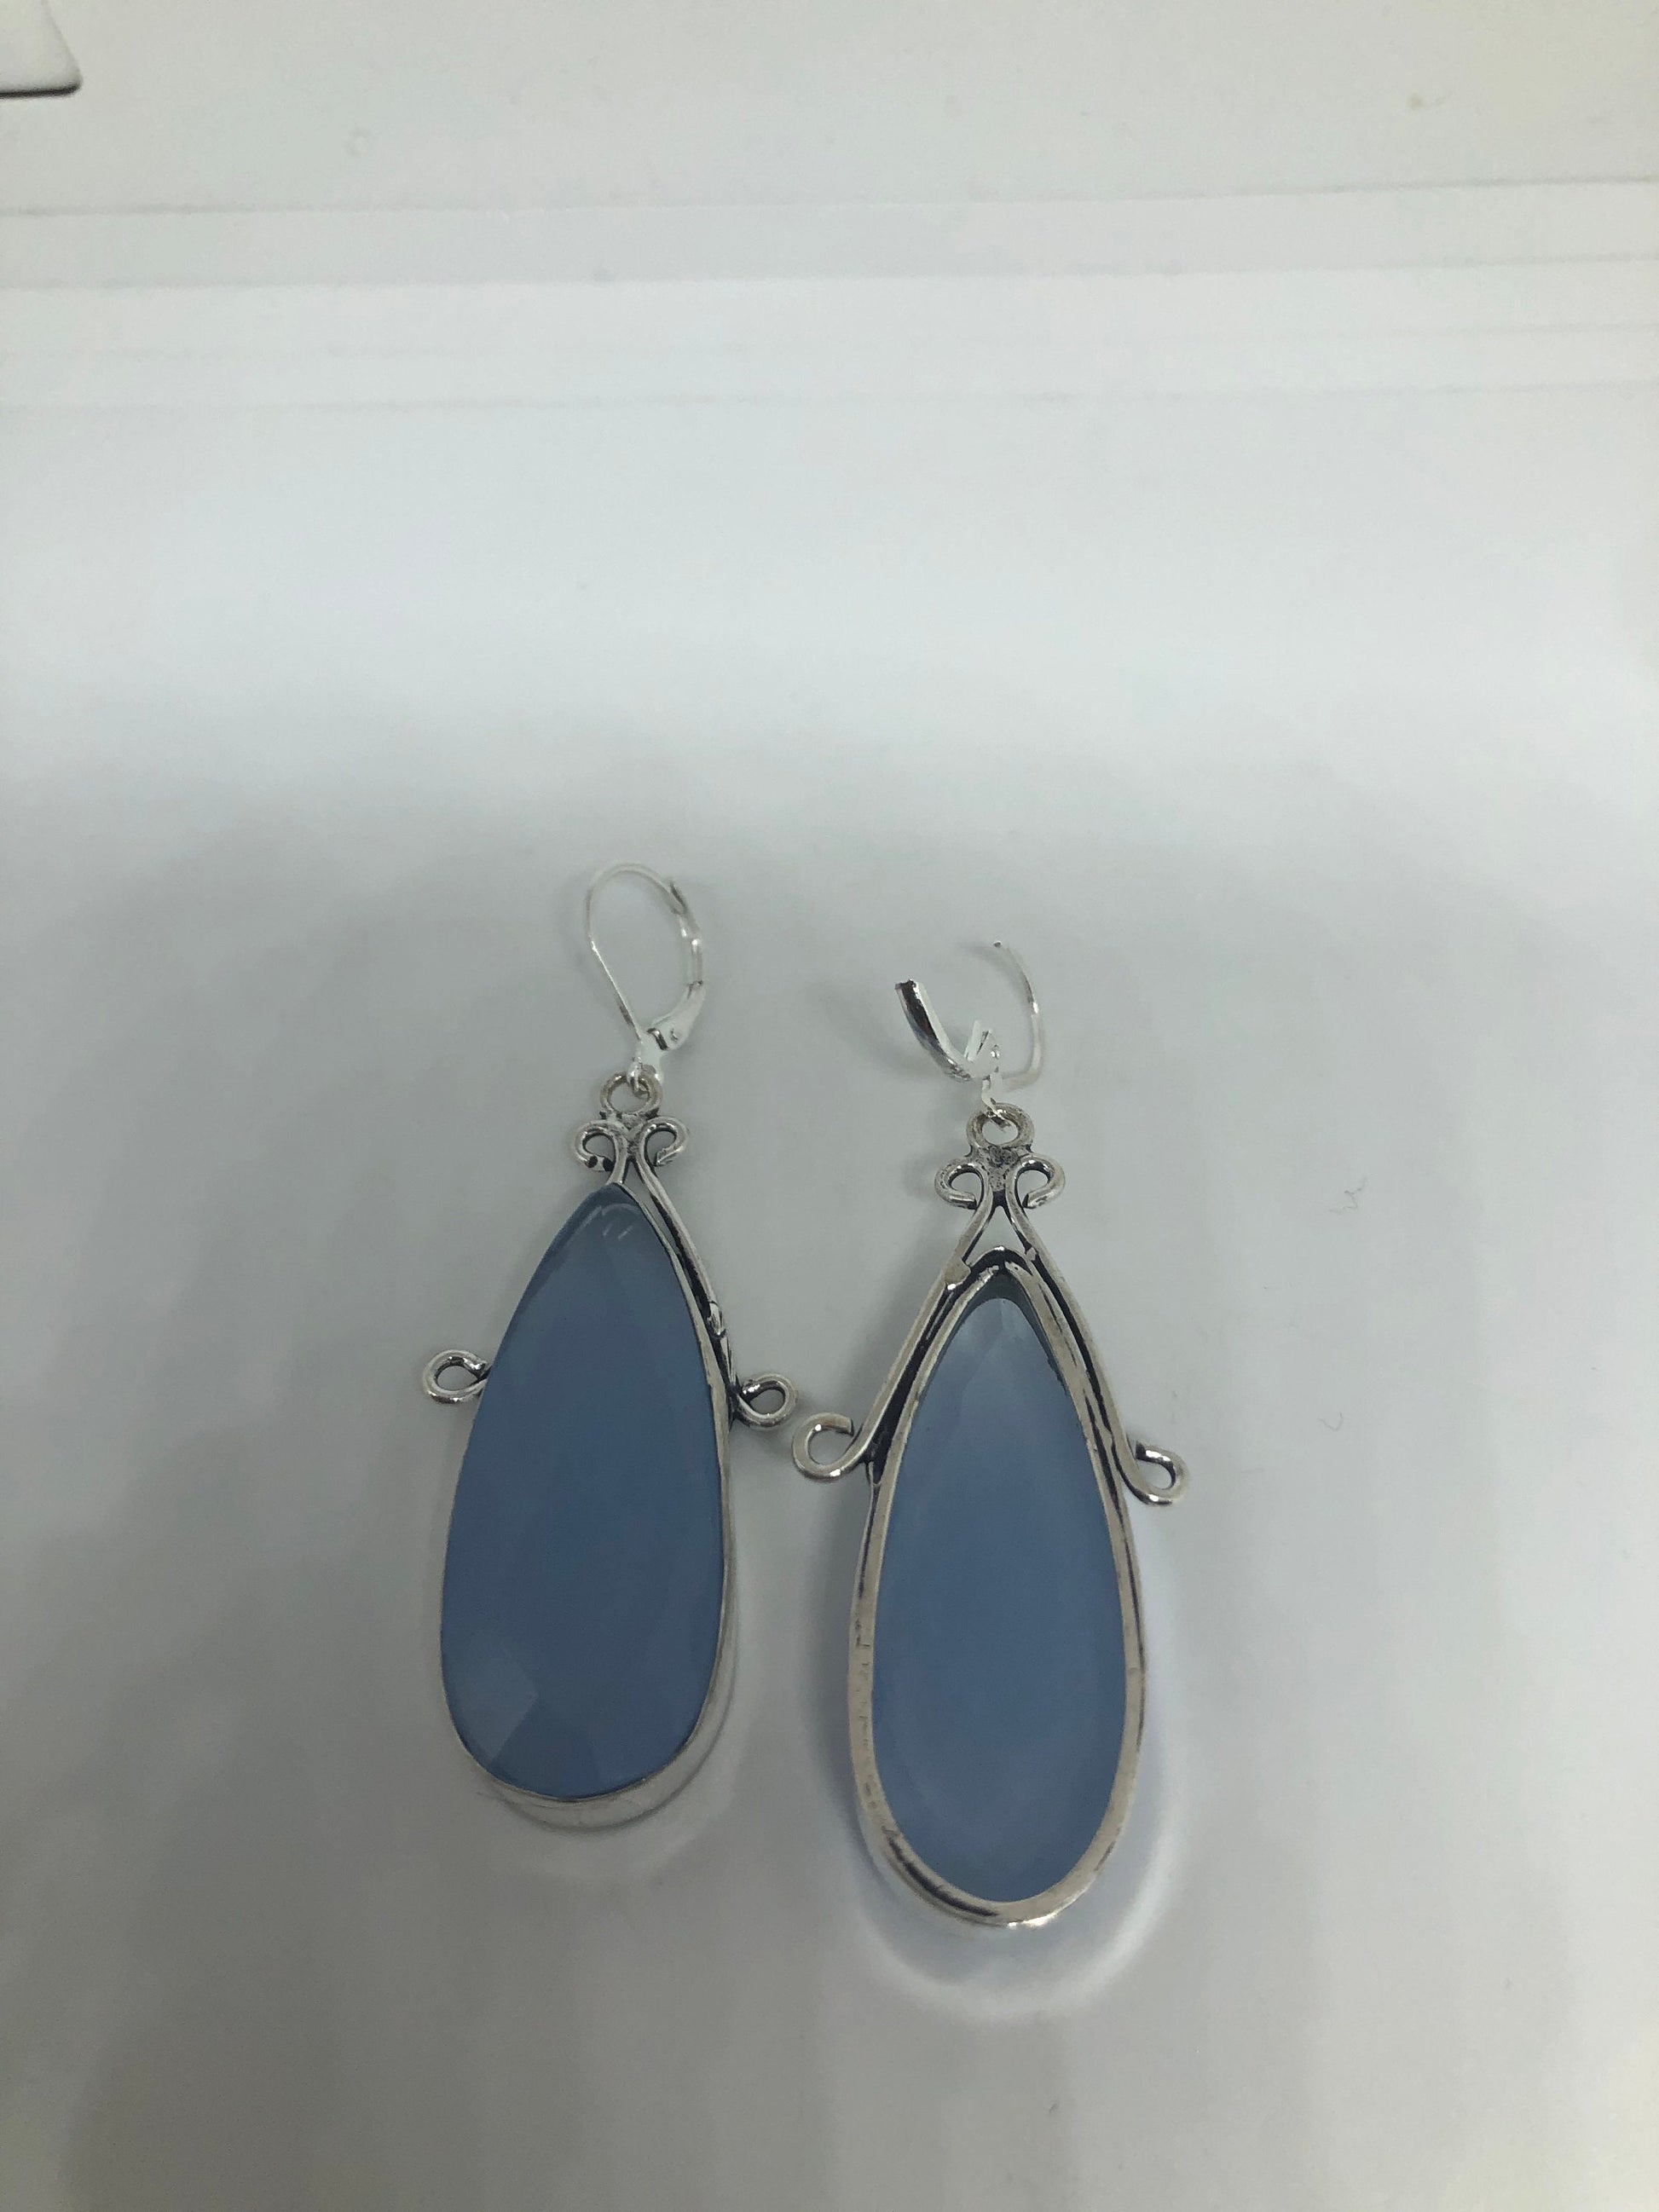 Vintage Blue Chalcedony Gemstone Sterling Silver Lever Back Chandelier Earrings